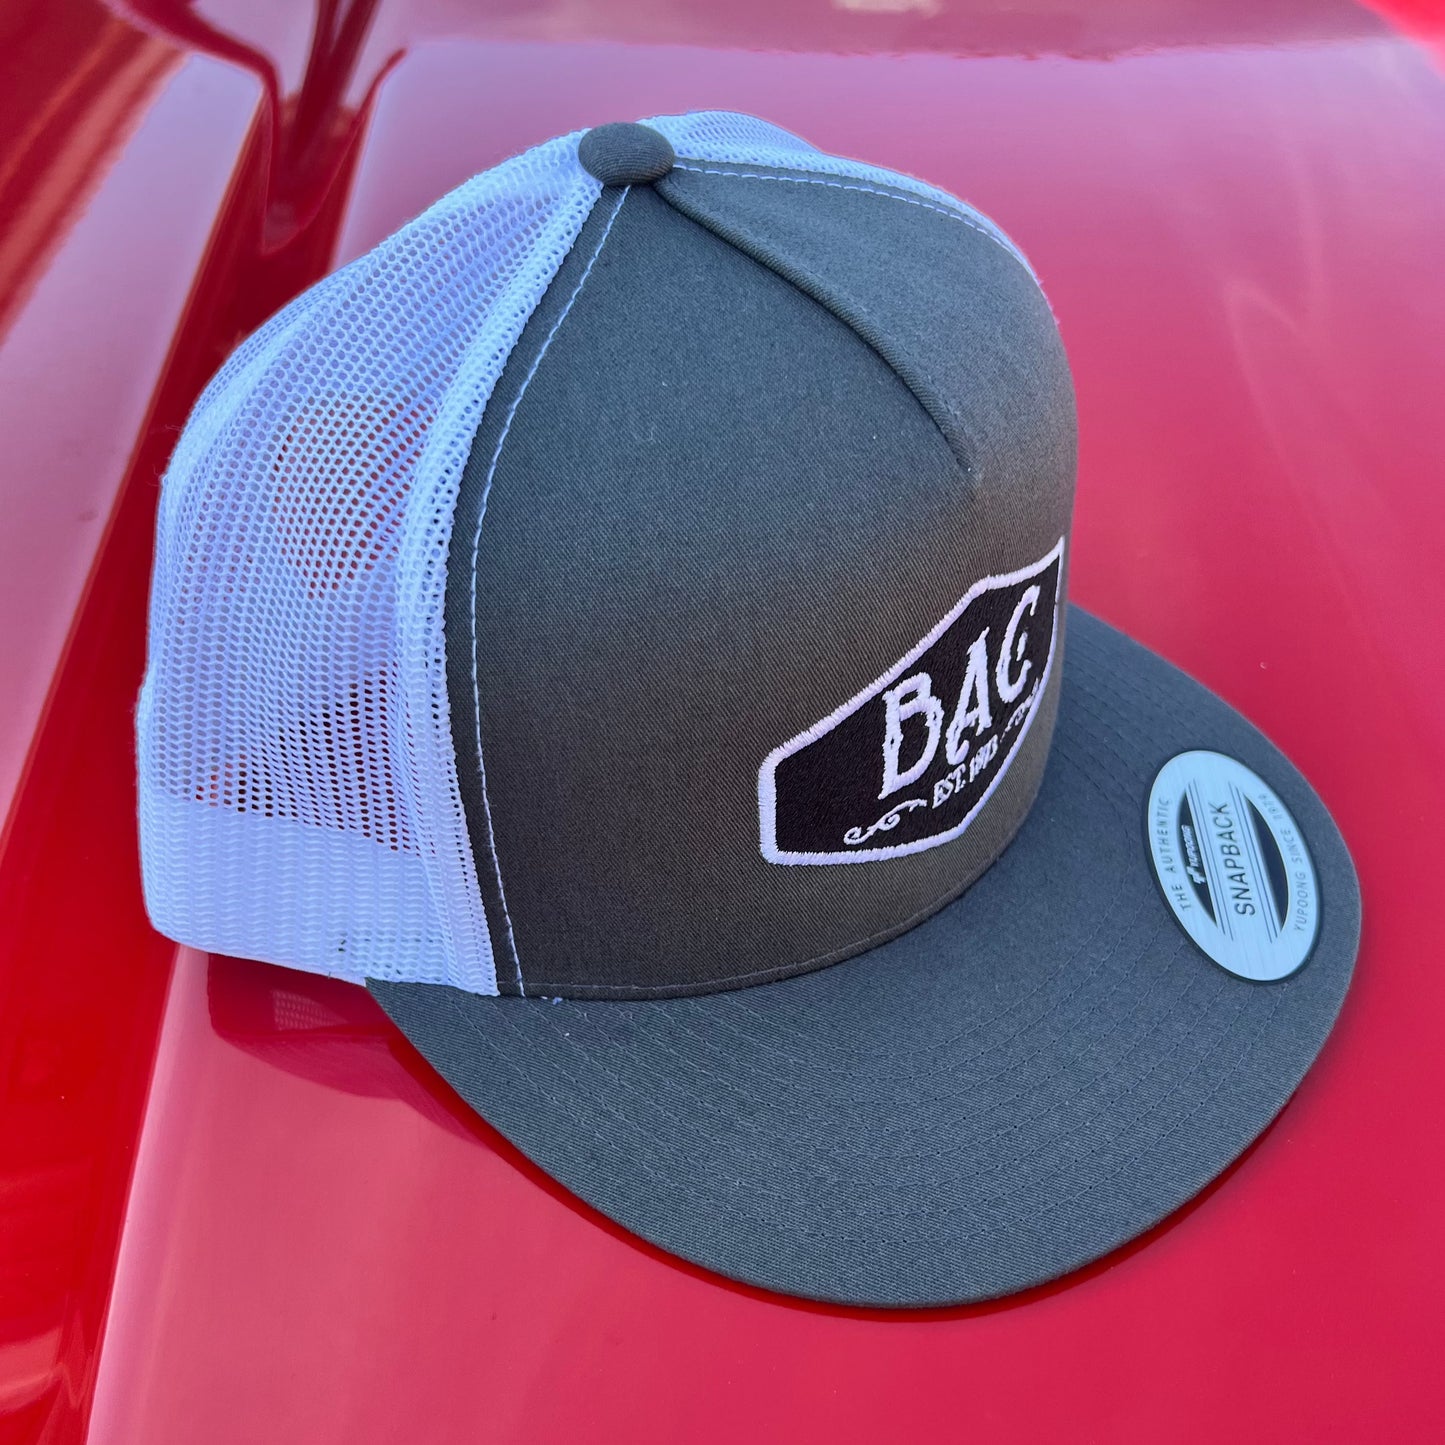 BAC Patch Logo White Mesh Back Trucker Hat